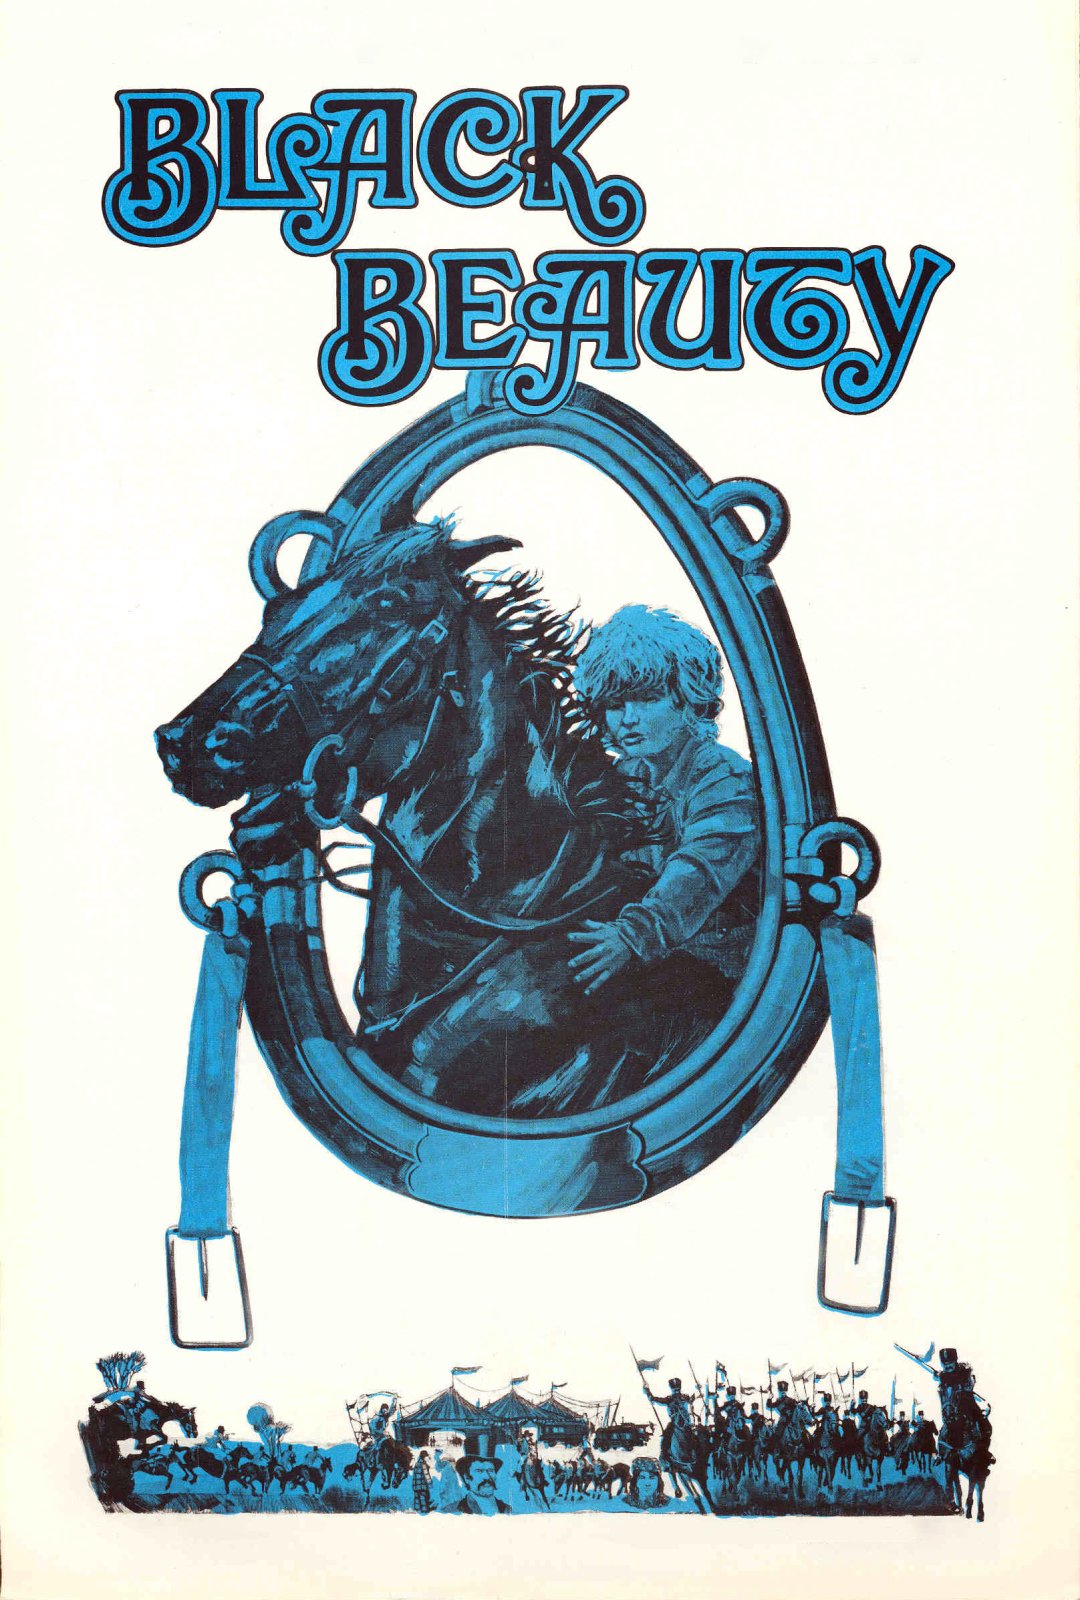 Black Beauty (1971)